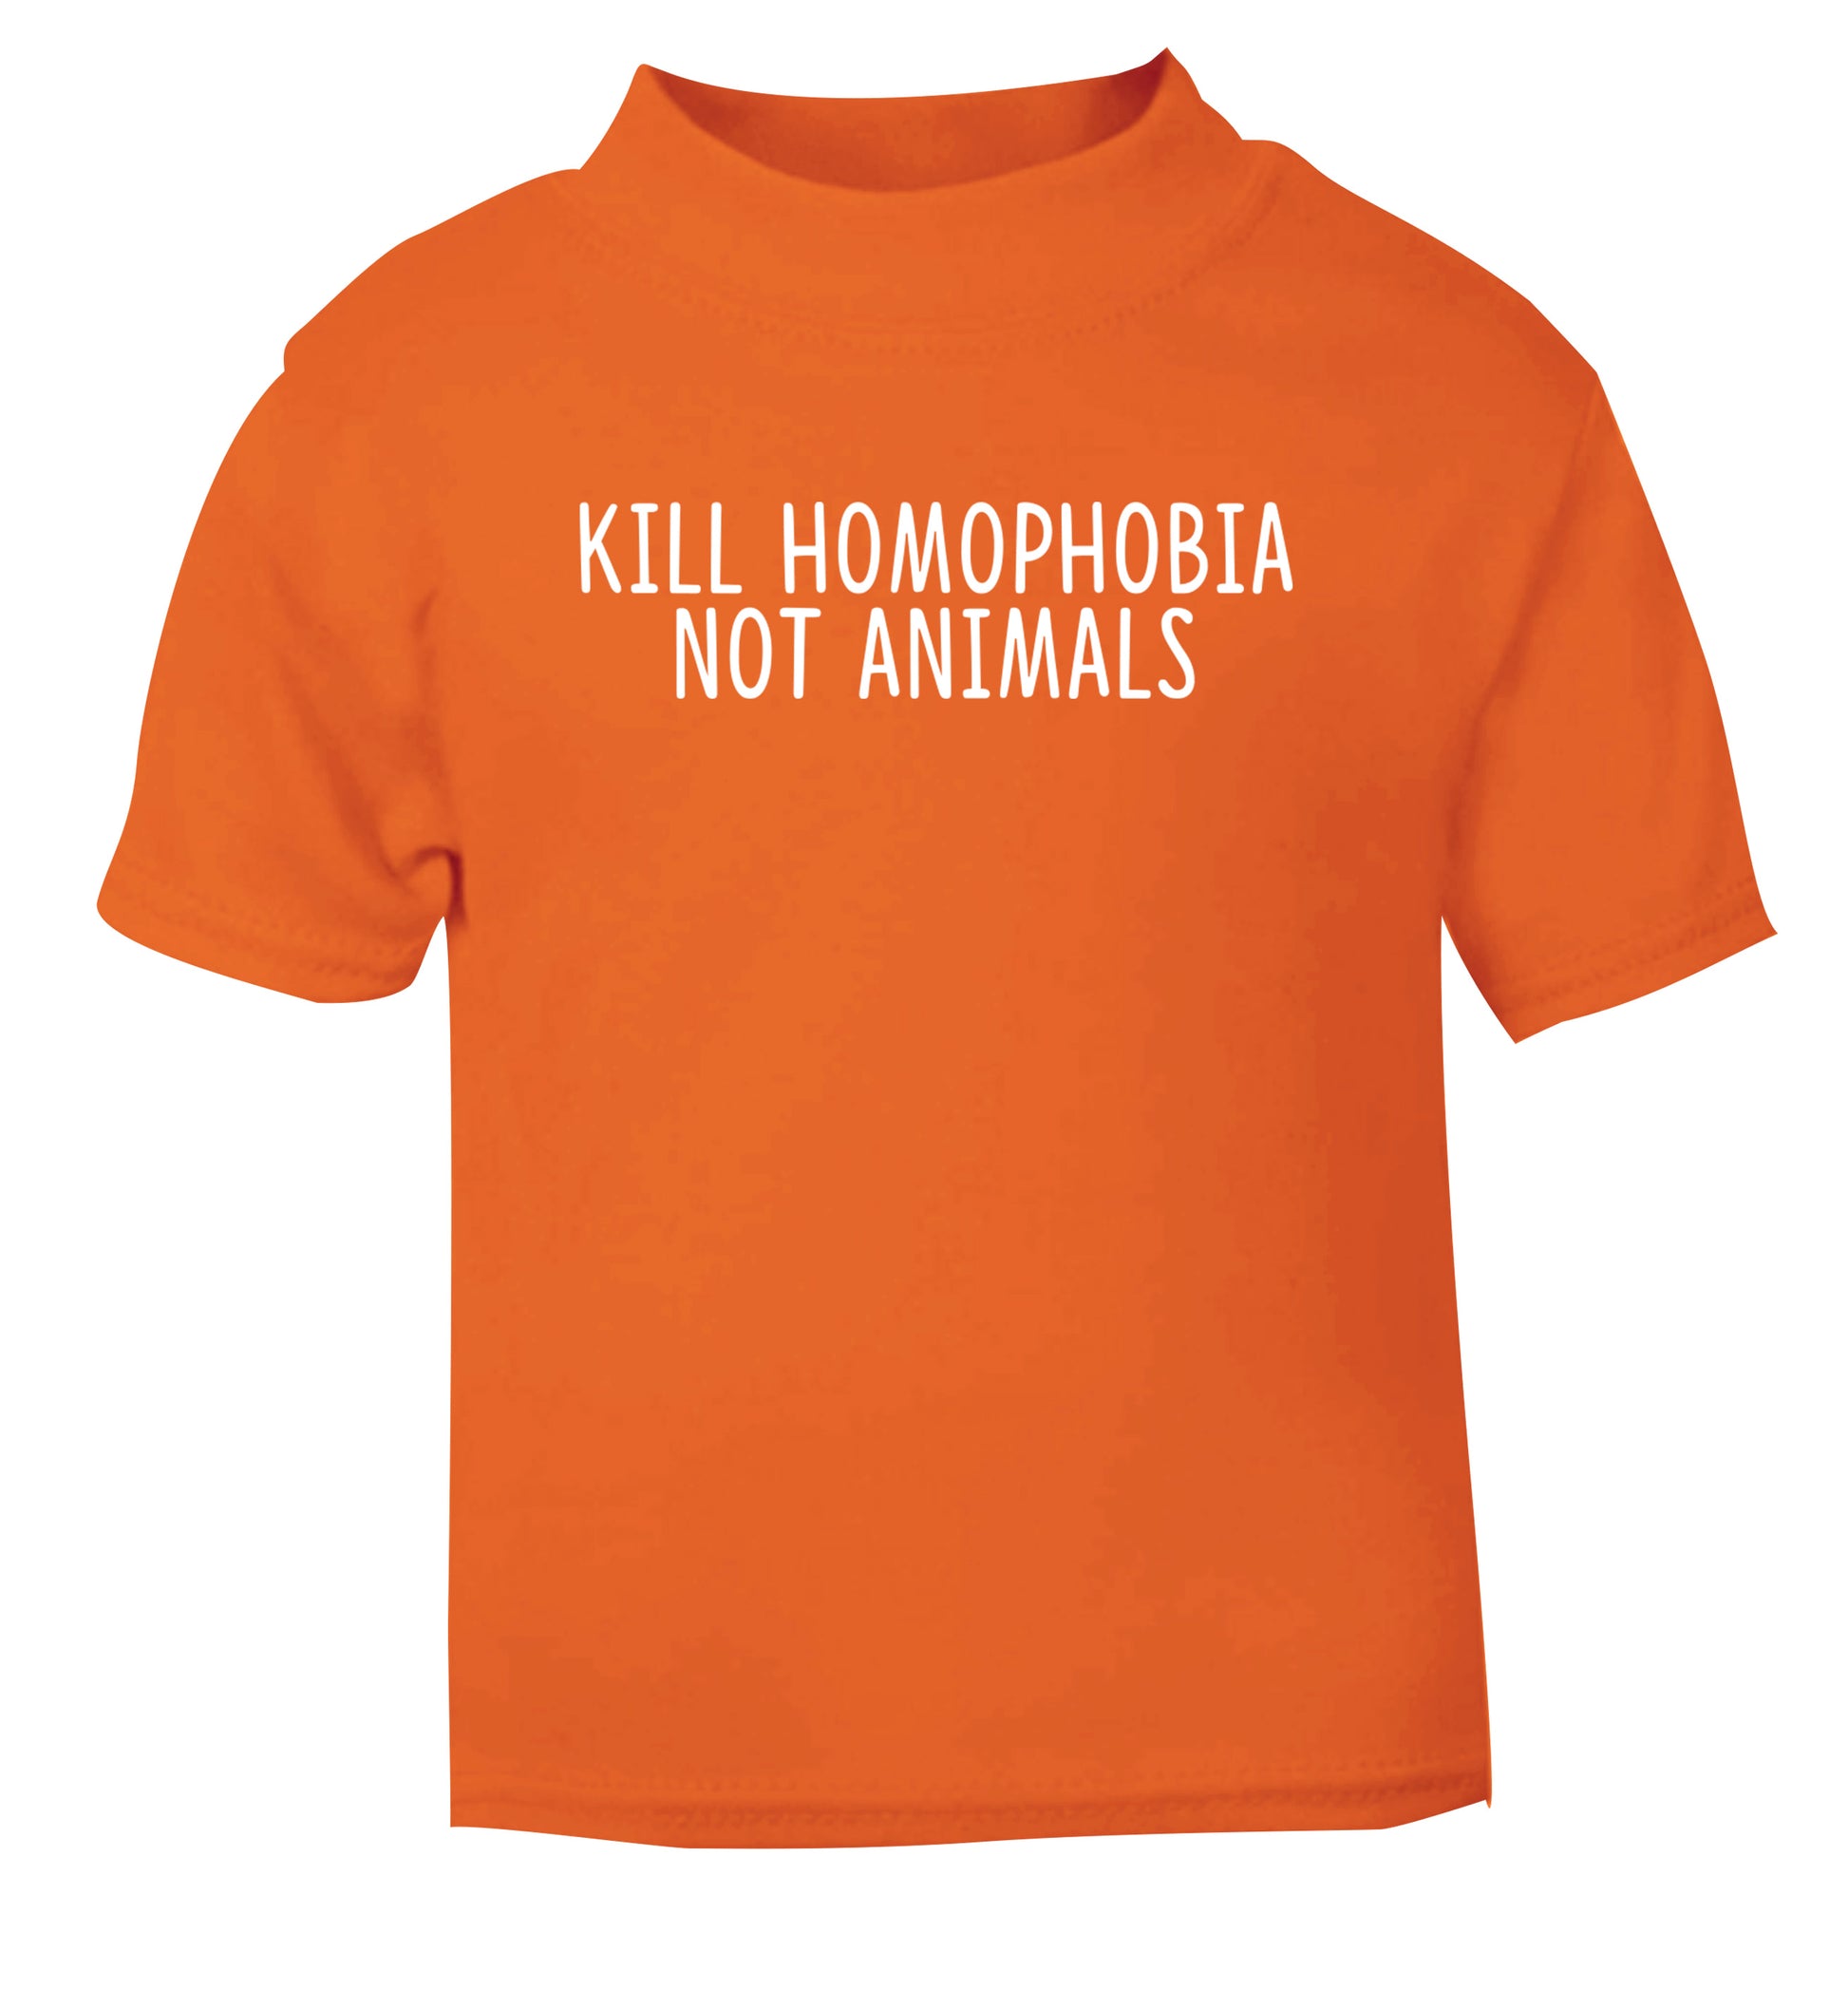 Kill Homophobia Not Animals orange Baby Toddler Tshirt 2 Years